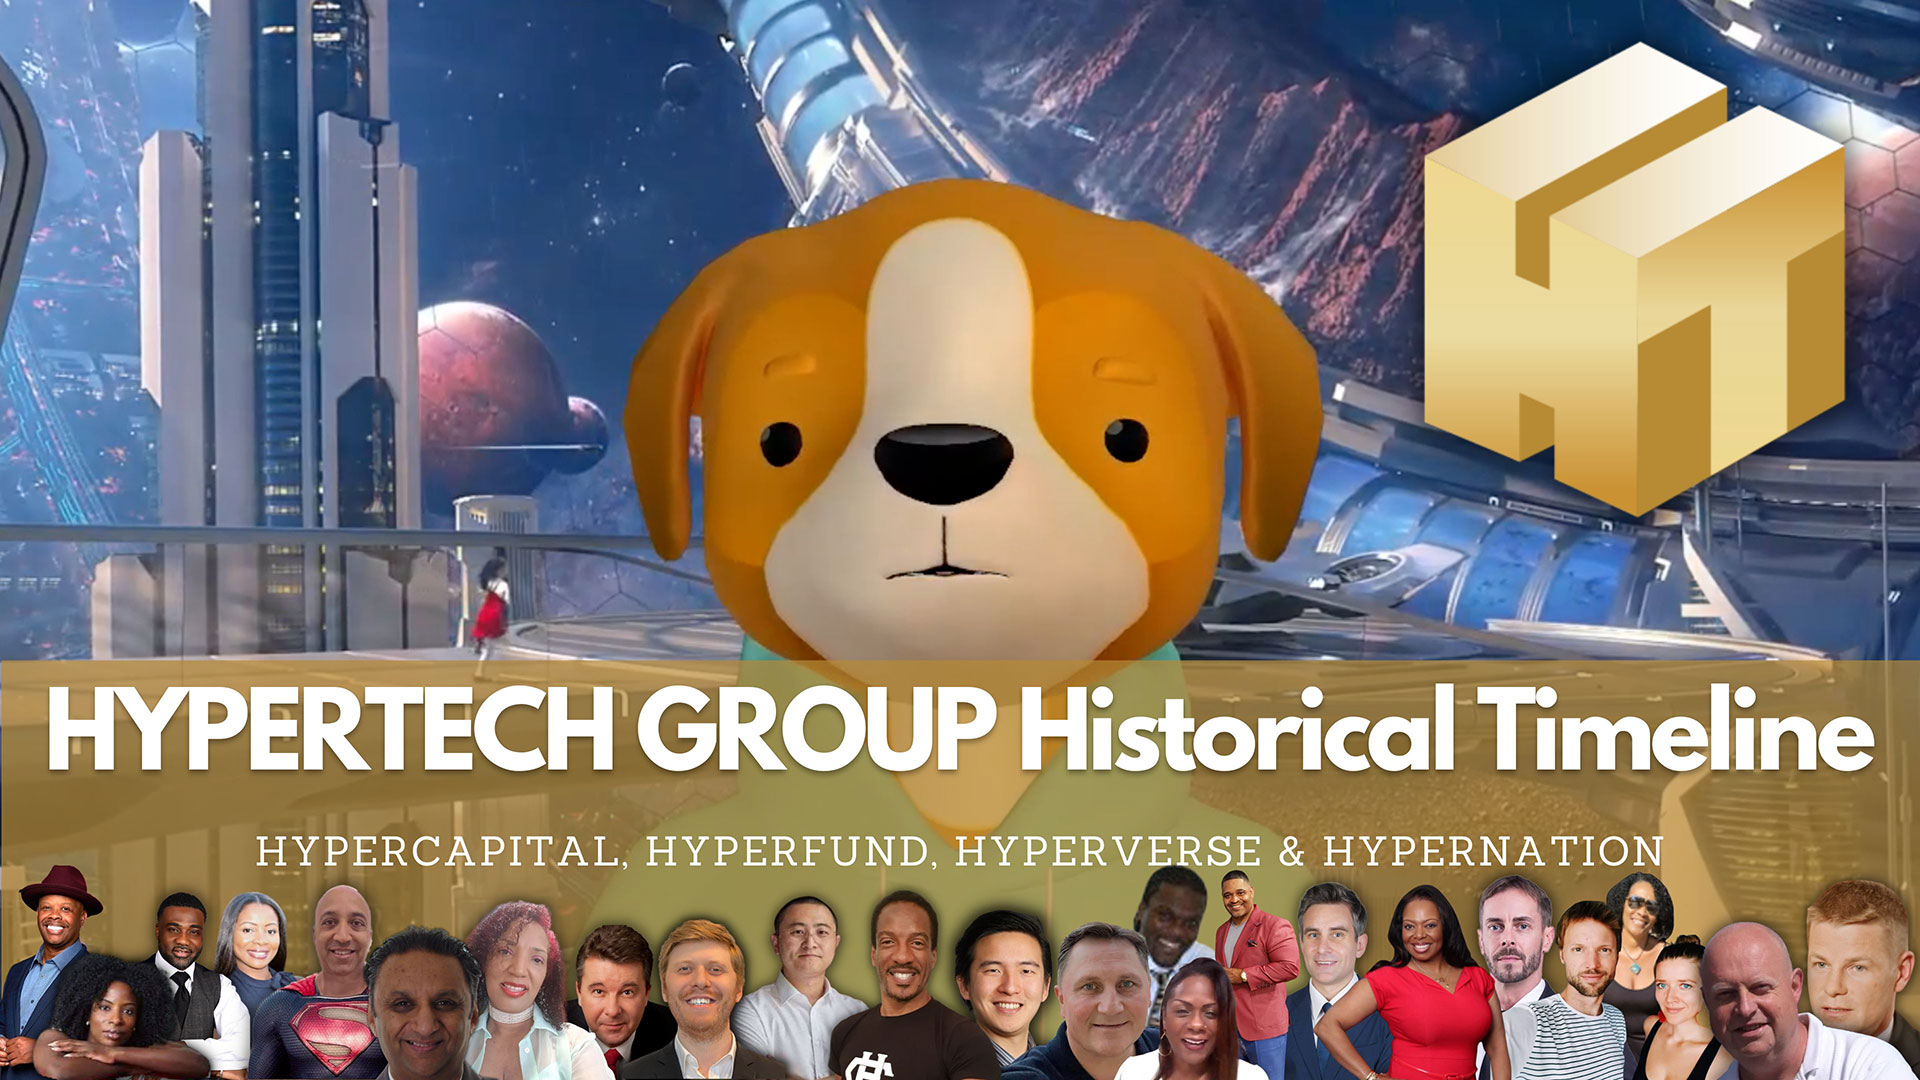 Hypertech Group Historical Timeline 2014 to 2022 - HyperCapital, HyperFund, HyperVerse & HyperNation